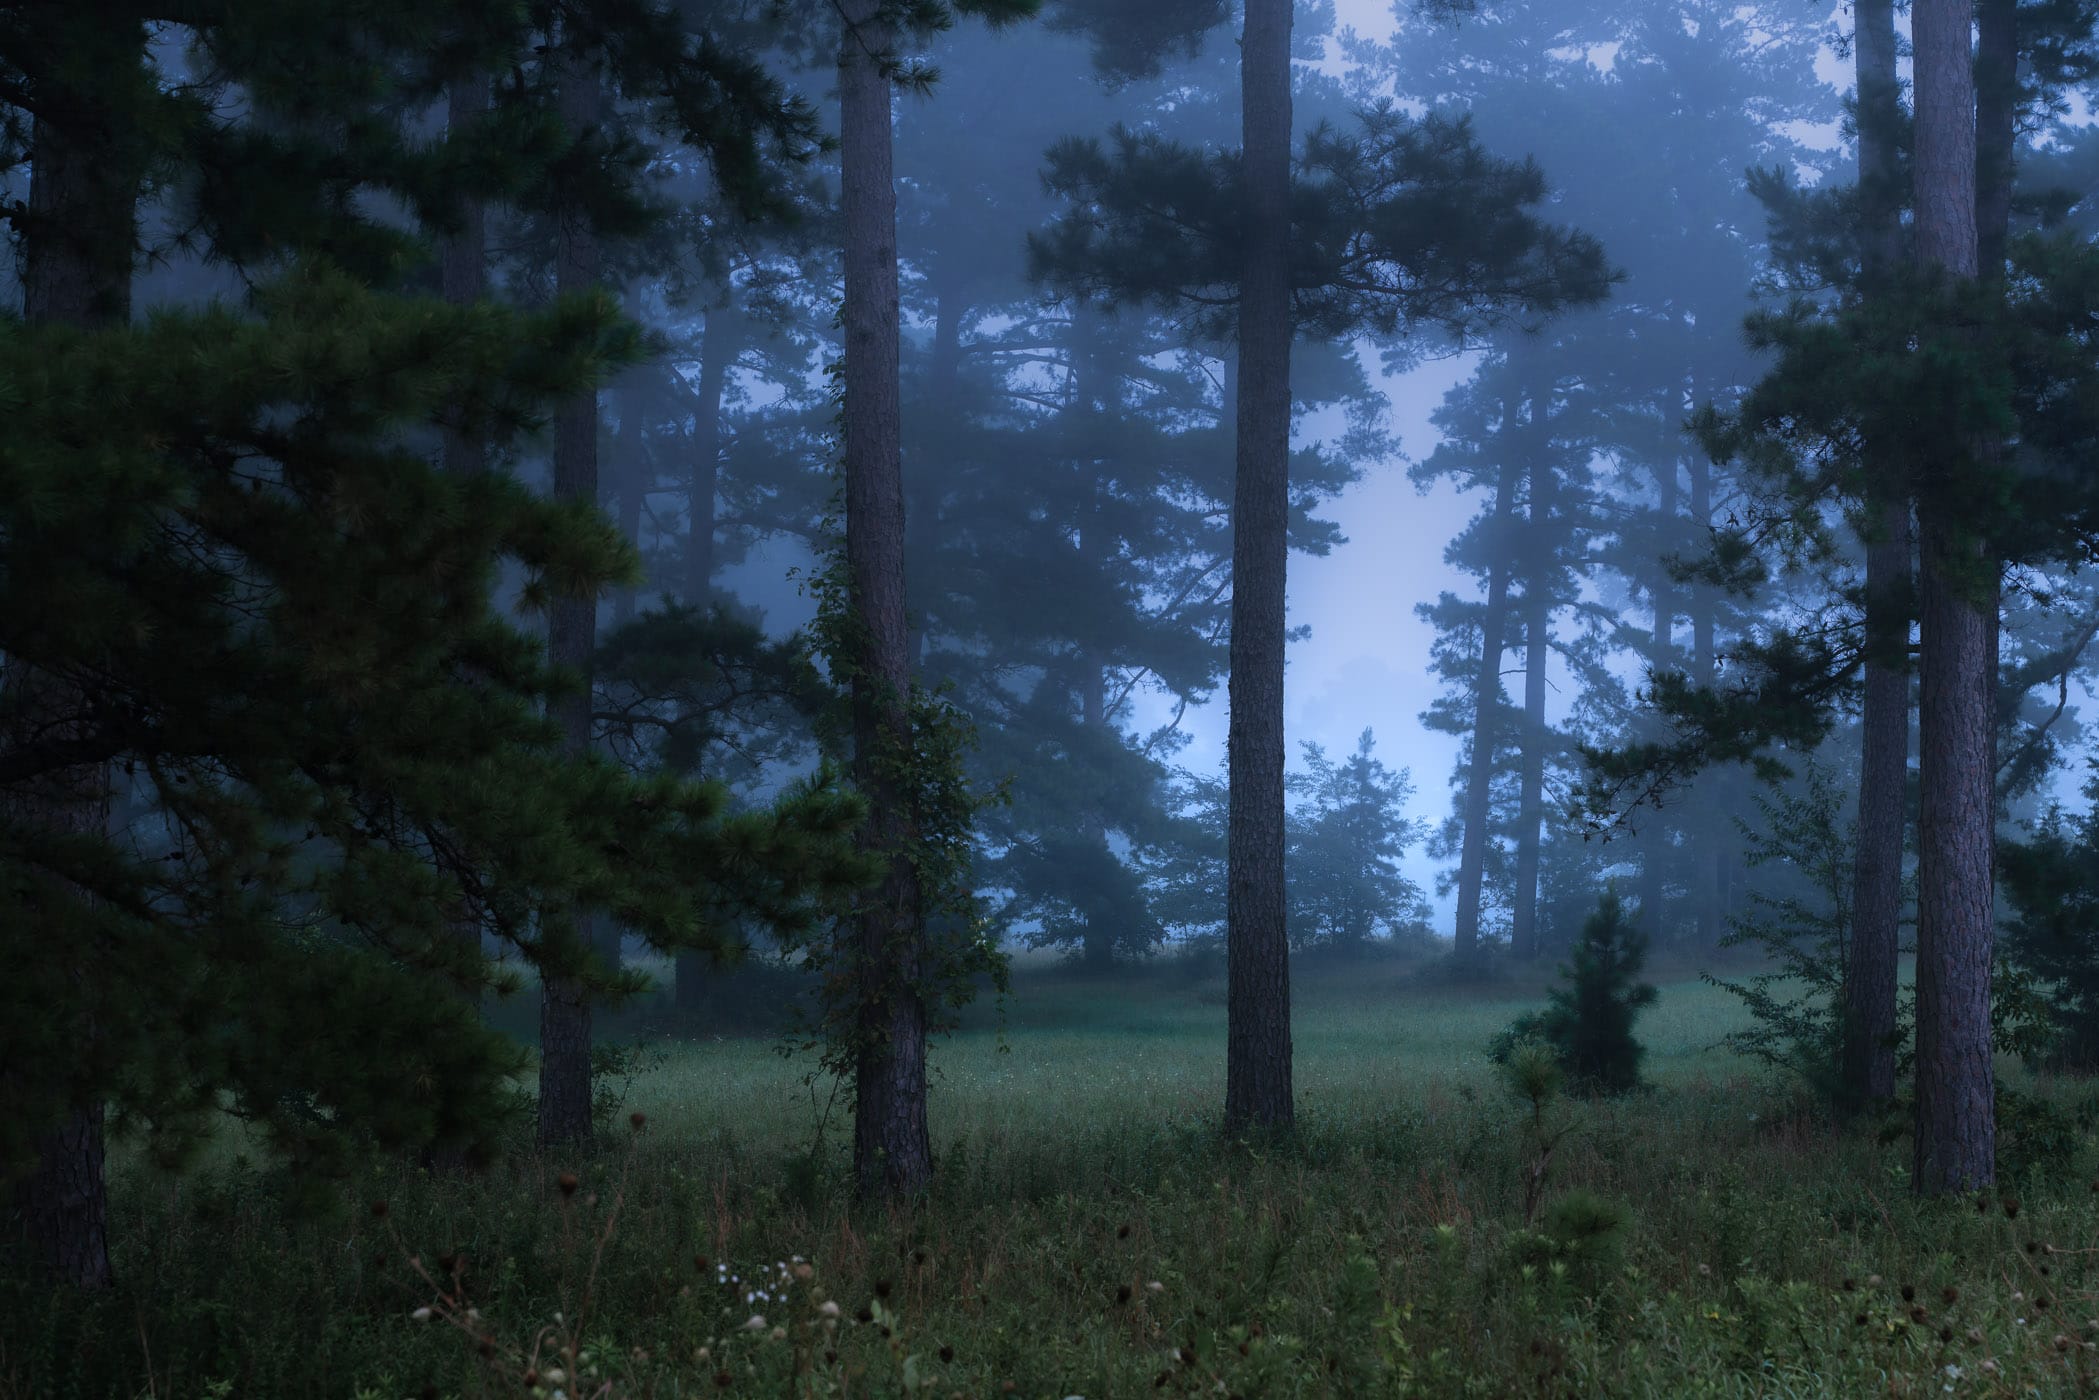 Morning fog in a forest near Mena, Arkansas.